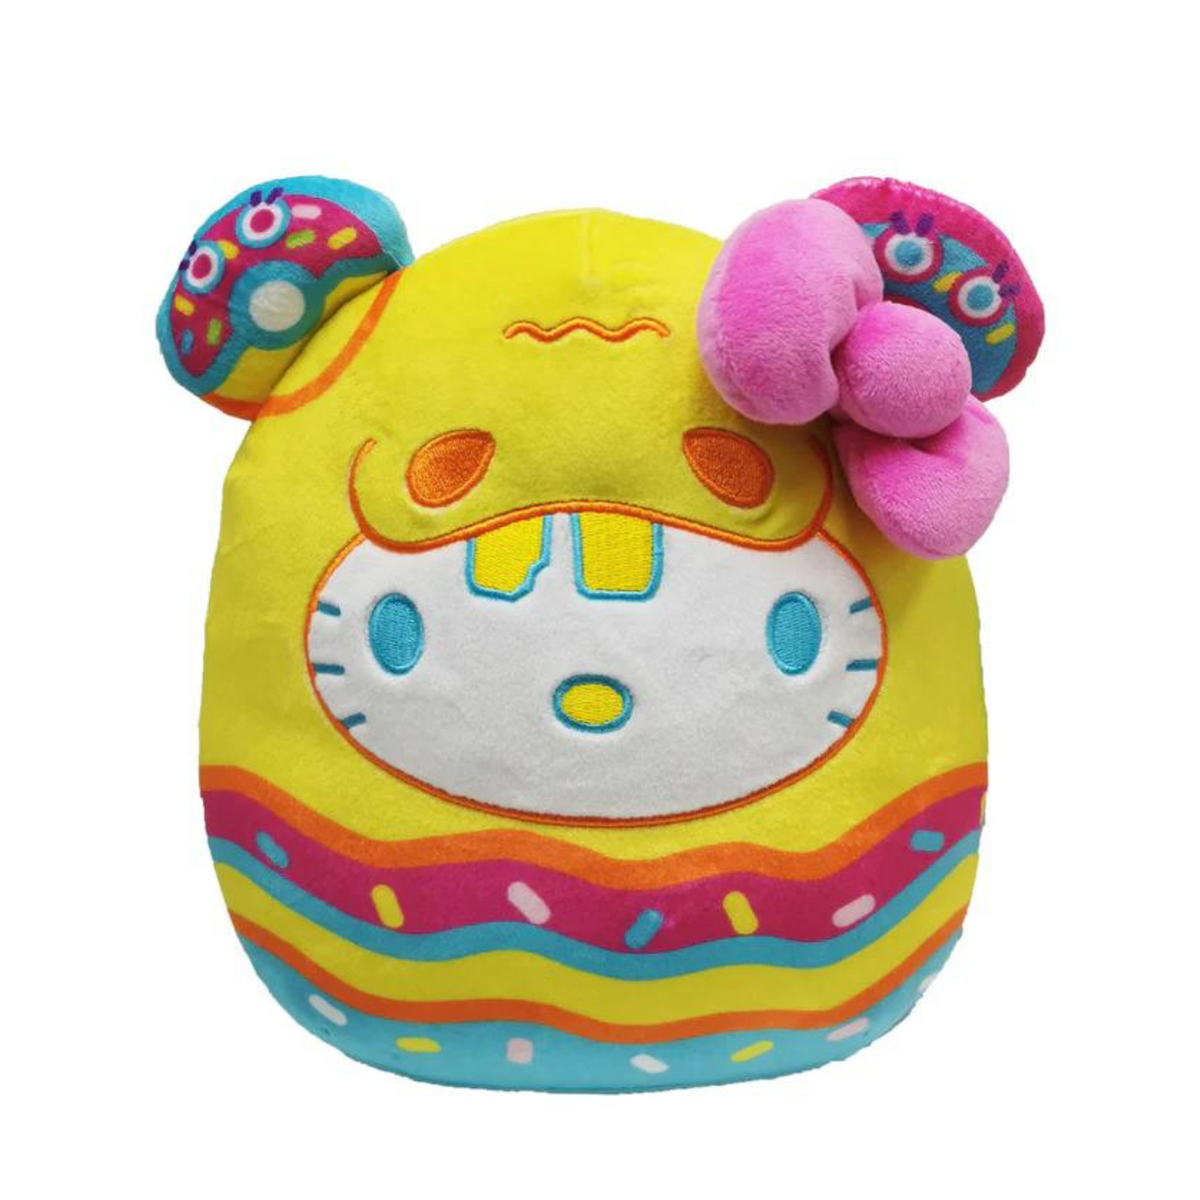 SANRIO Keroppi Washable Plush Toy (Let's try it series)